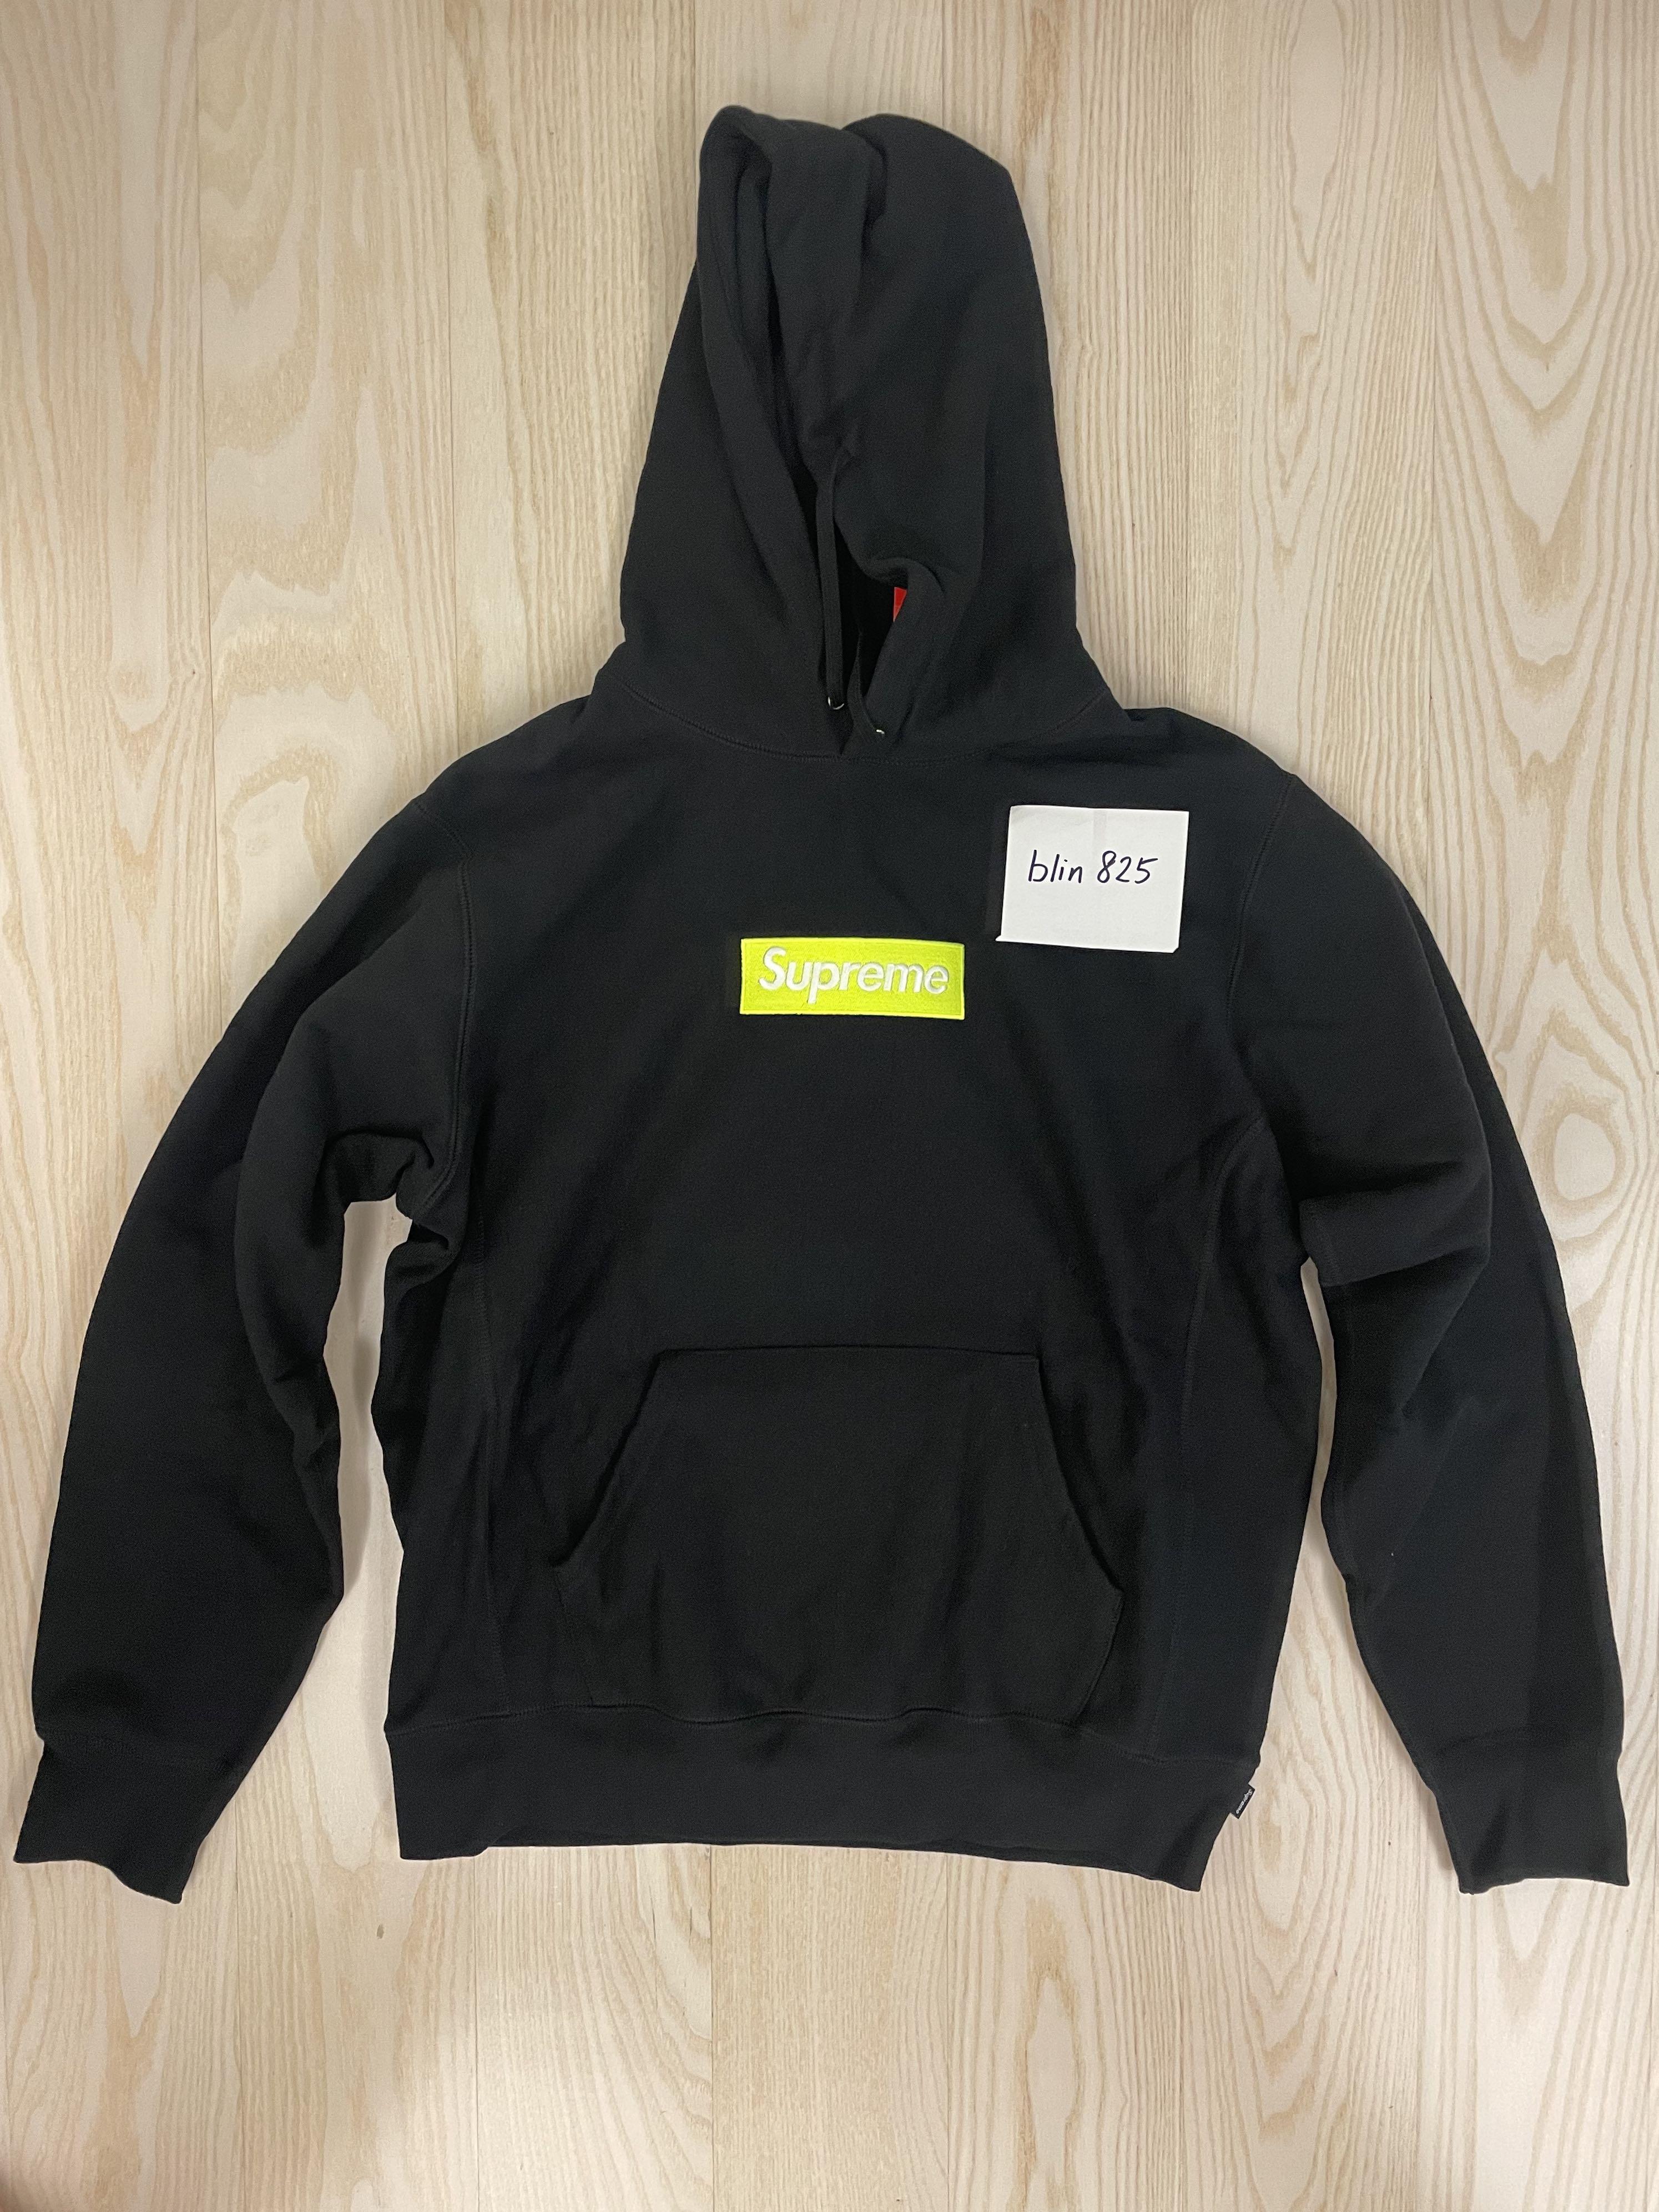 Buy Supreme Box Logo Hooded Sweatshirt 'Black' - FW17SW10 BLACK